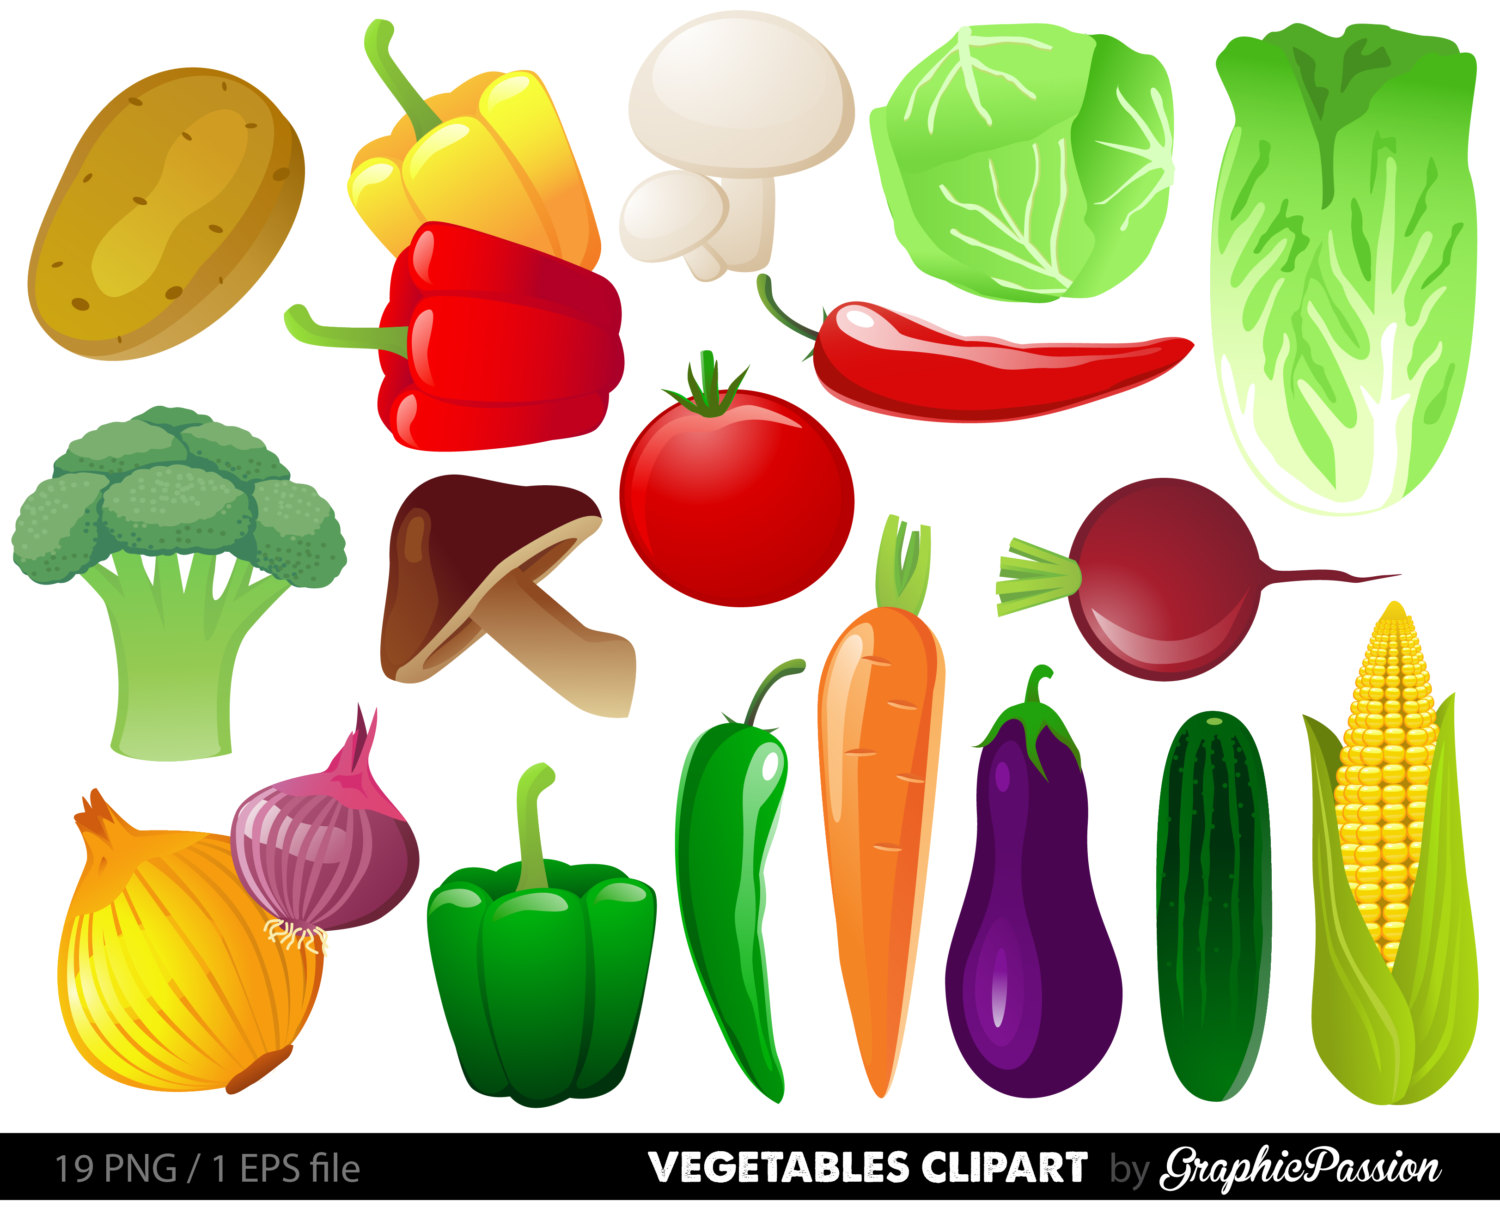 Food clipart vegetables 